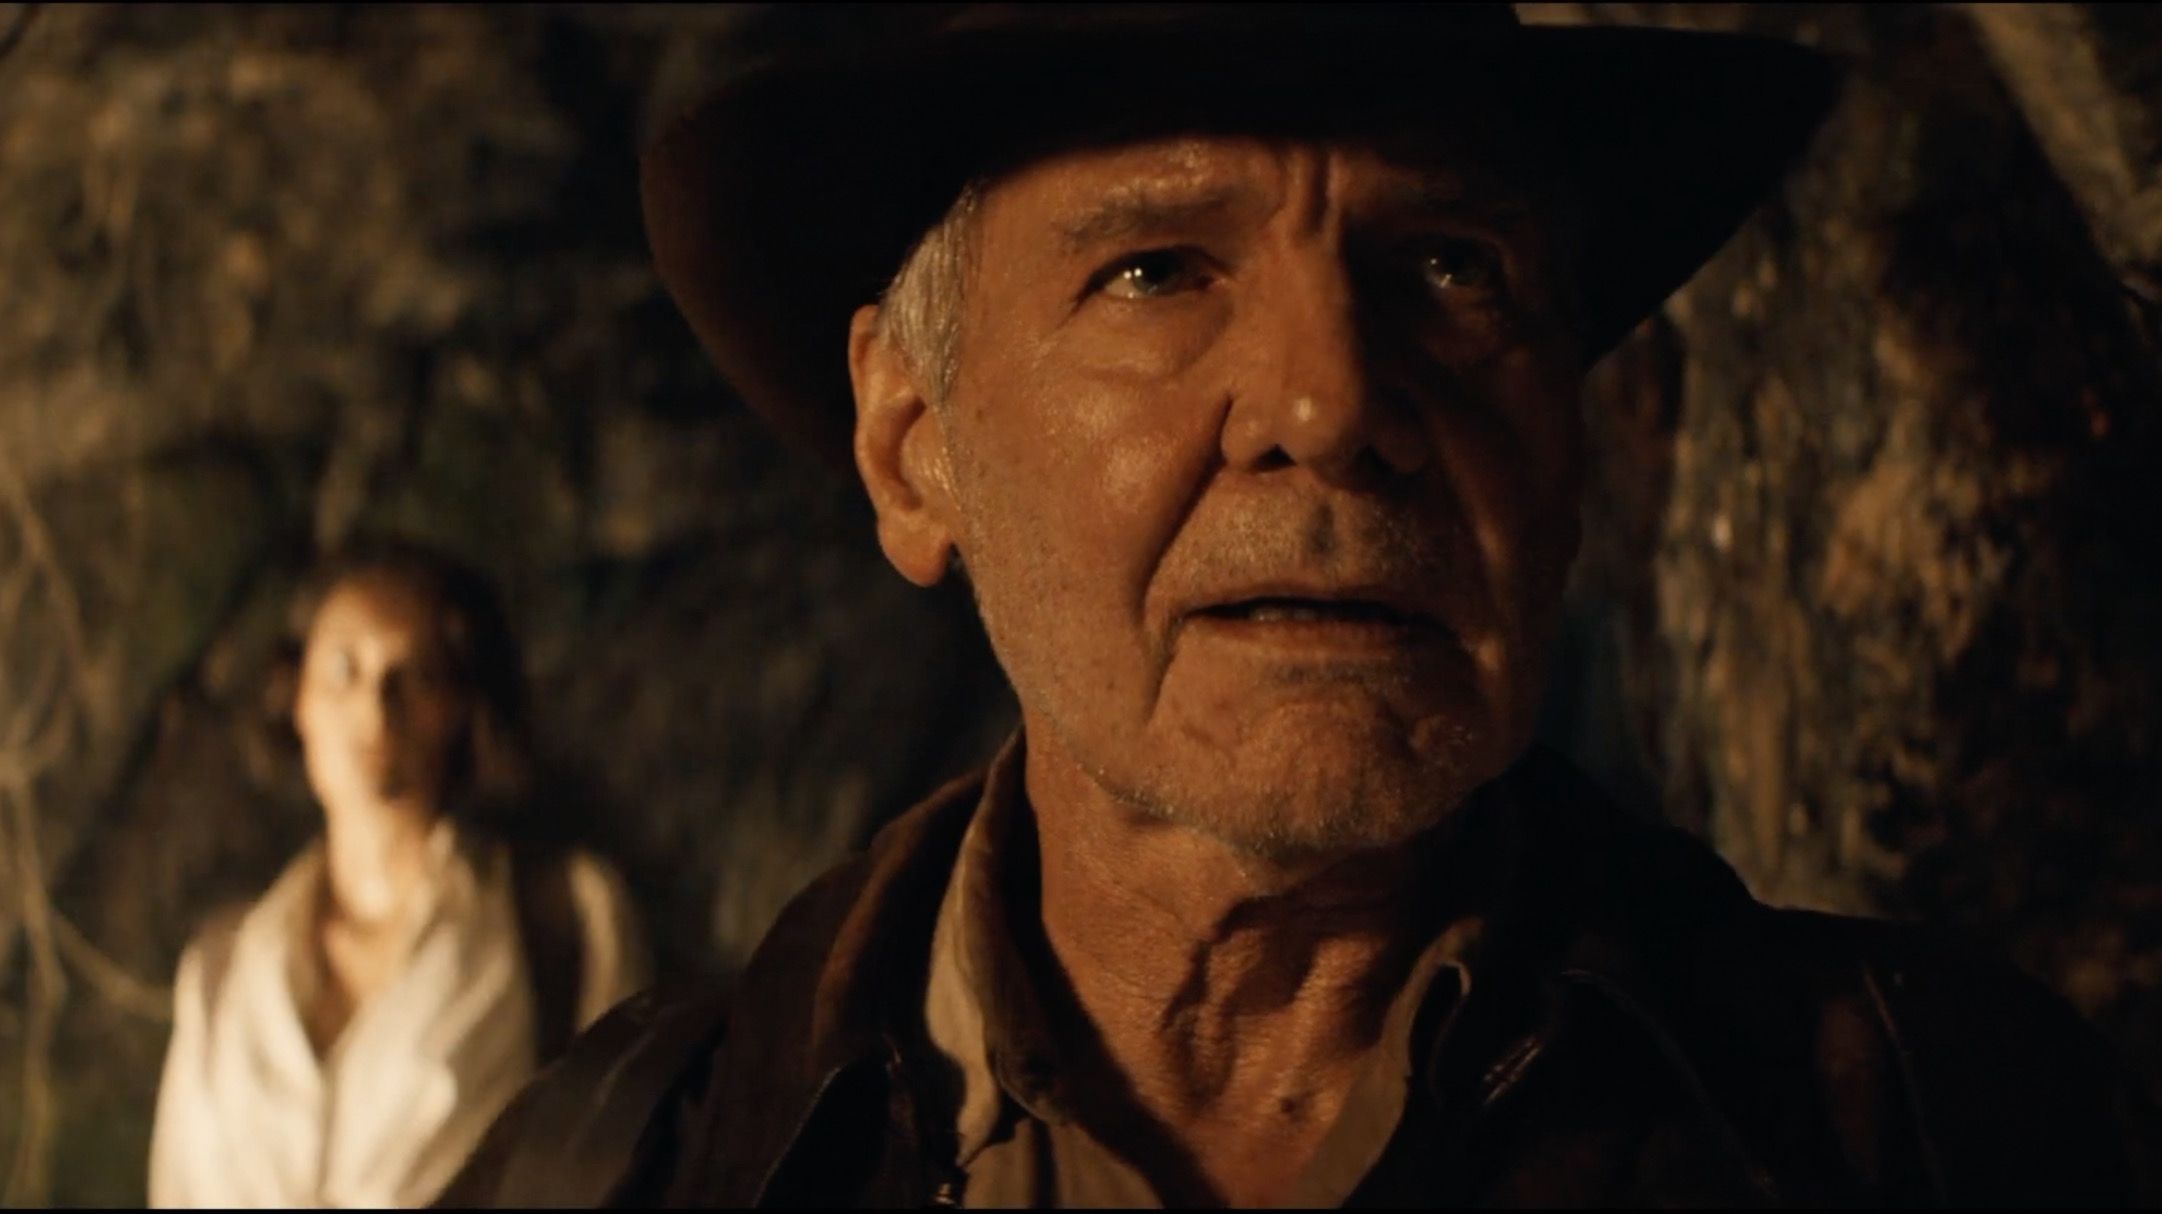 Indiana Jones 5' Ending, Explained: What Happened?